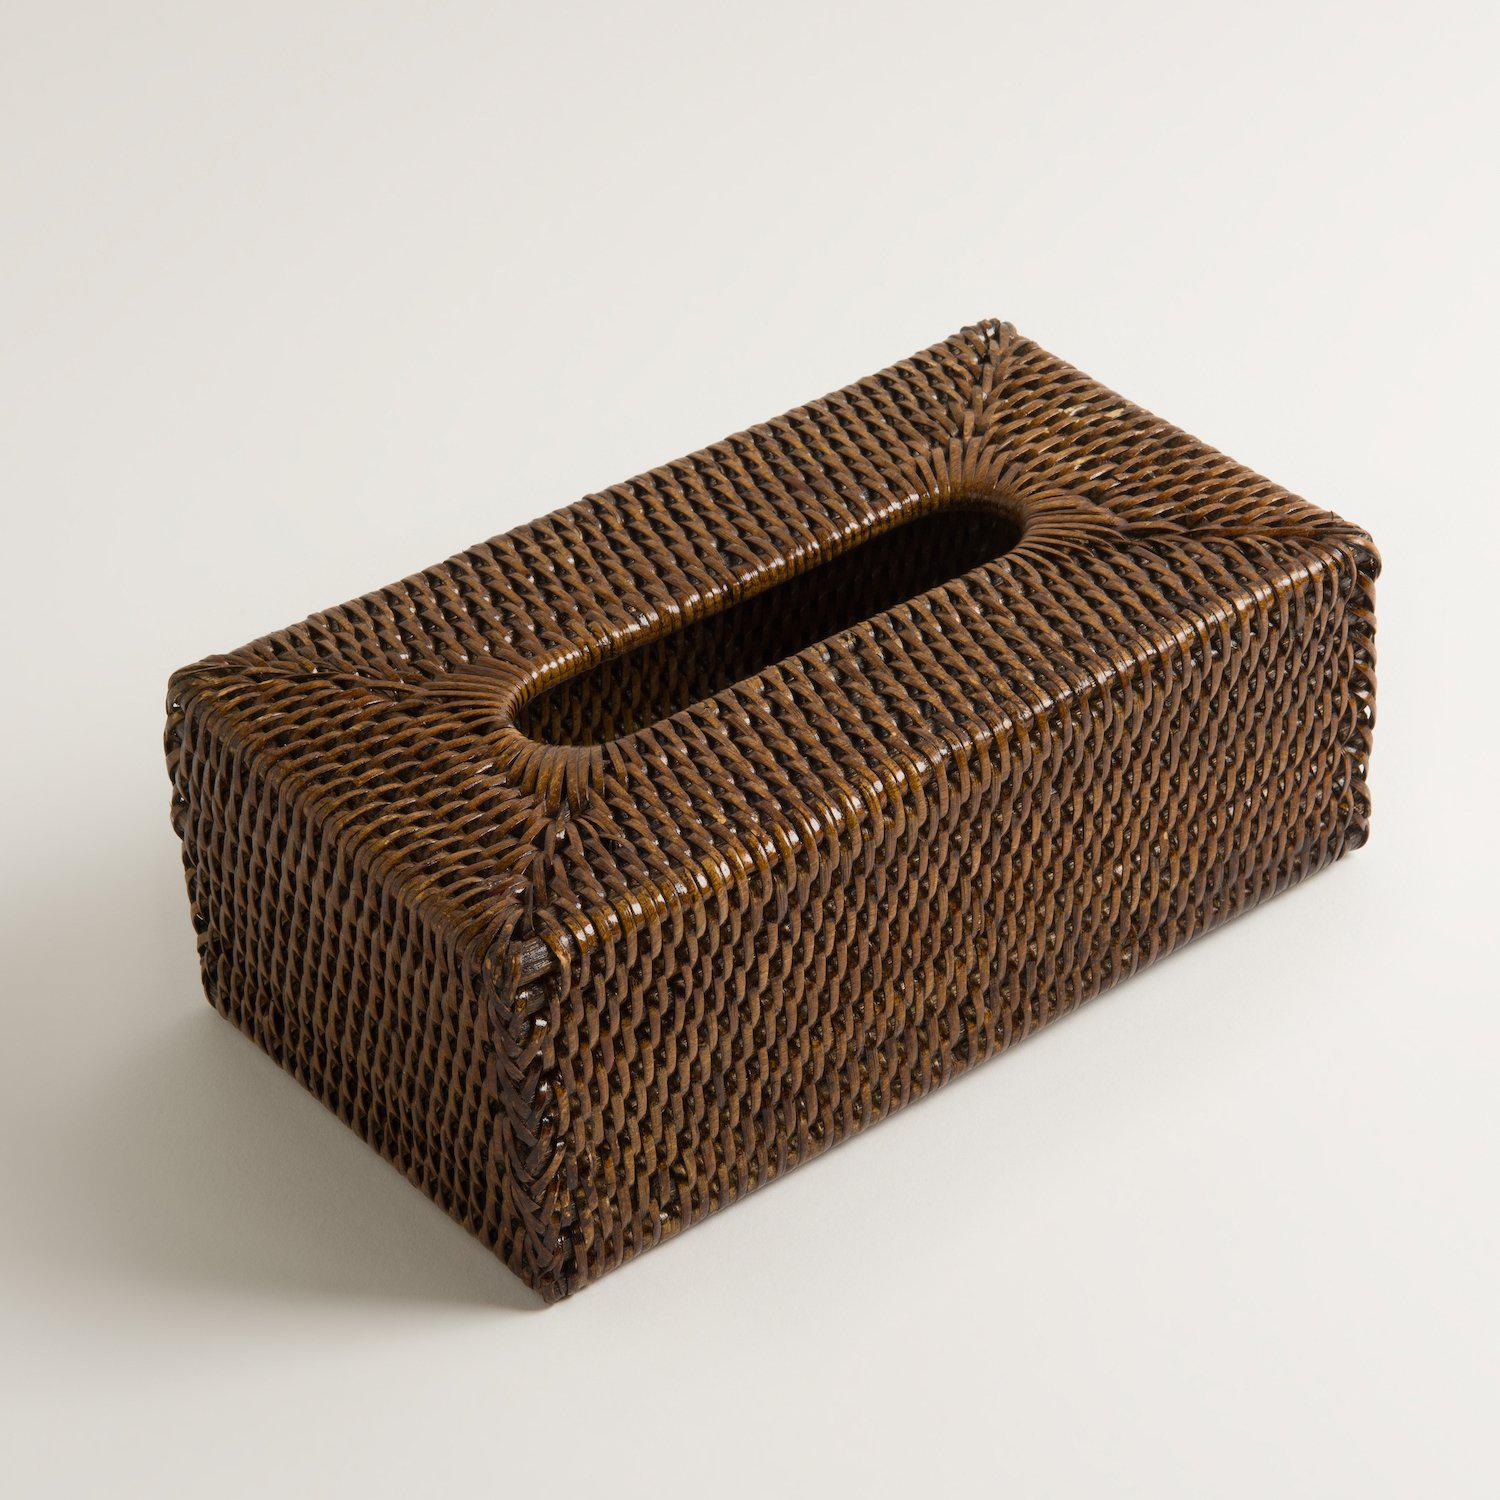 Rattan Hand-Woven Tissue Box Cover - Brown